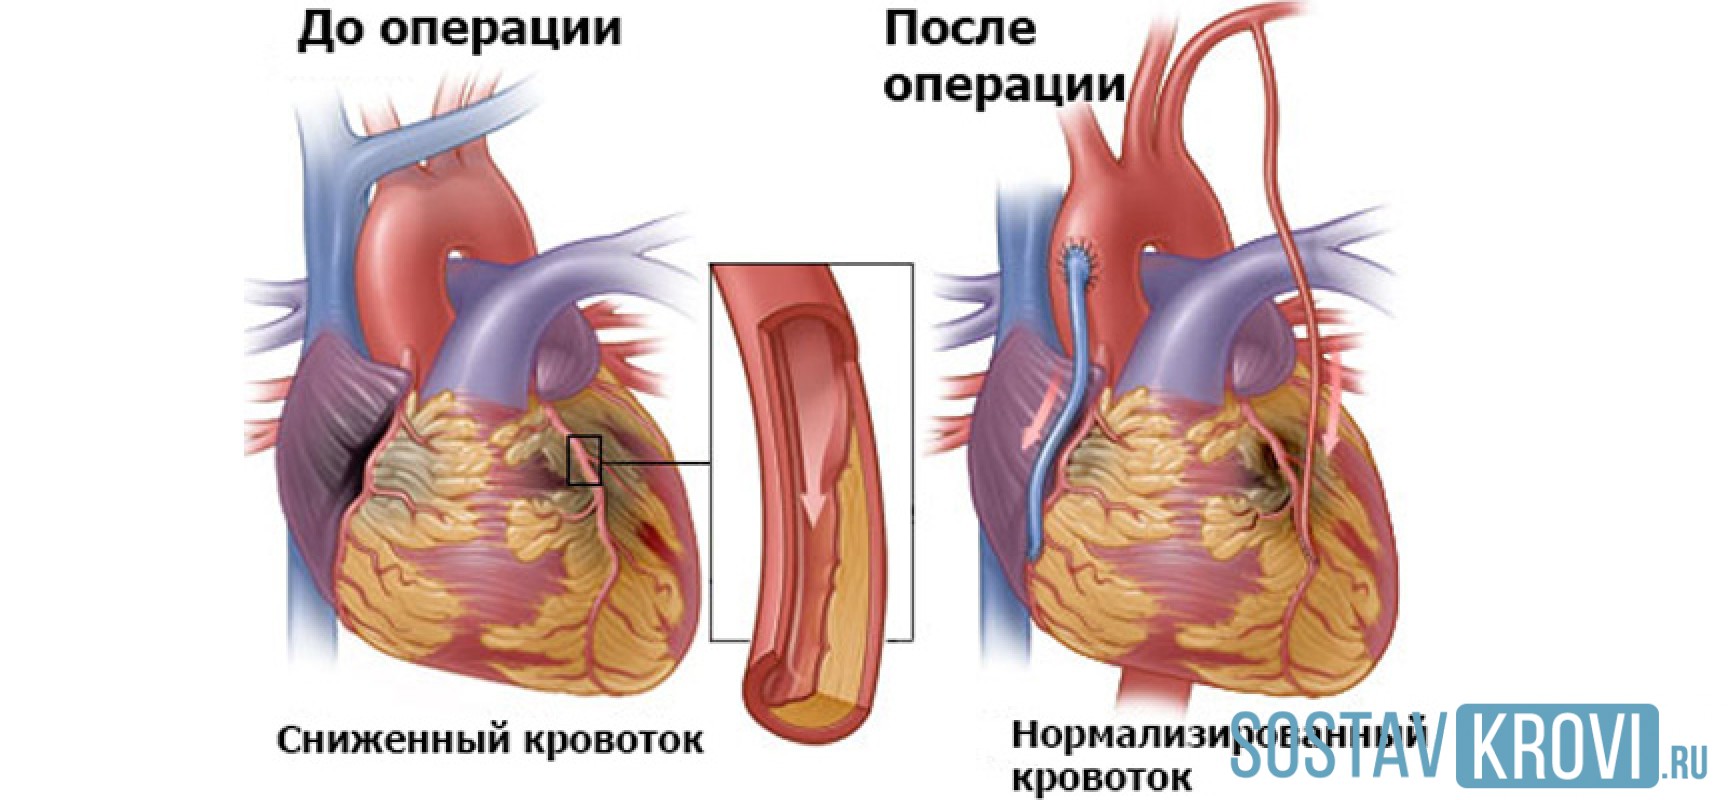 Поставили шунты. Шунтирование коронарных артерий. Аортокоронарное шунтирование хирургия. Маммарно коронарное шунтирование. Коронарное шунтирование сосудов сердца.